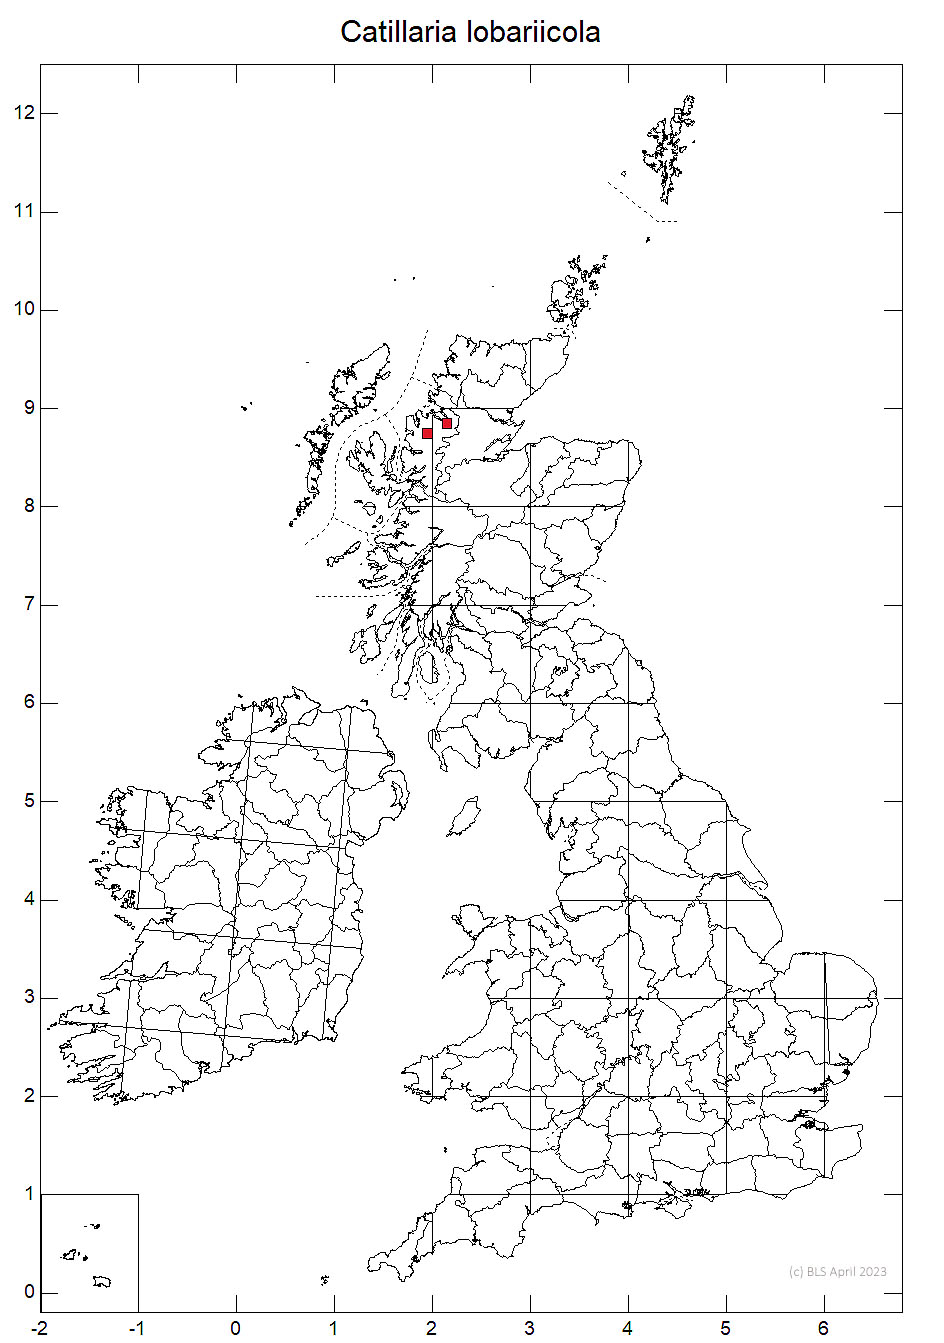 Catillaria lobariicola 10km sq distribution map